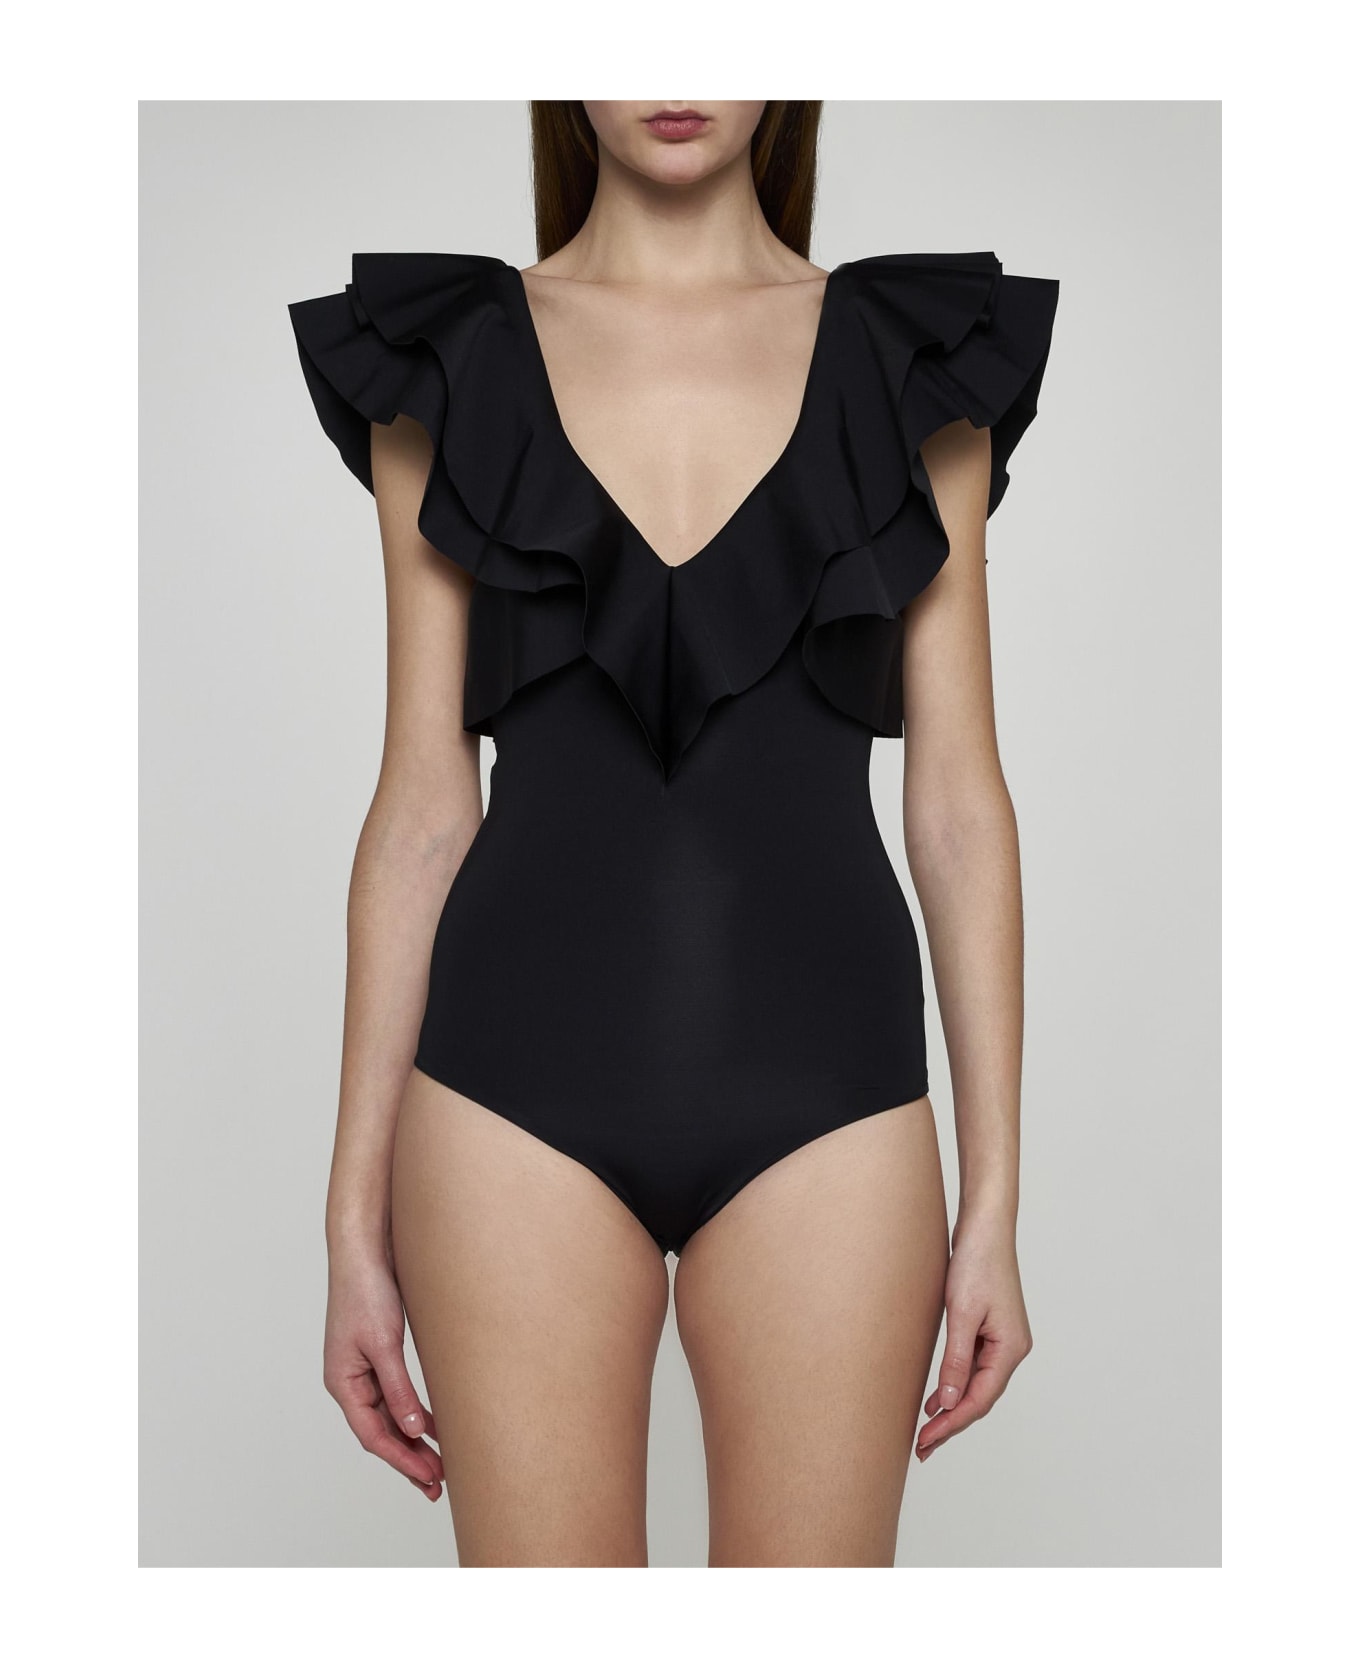 Maygel Coronel Santa One-piece Swimsuit - Black